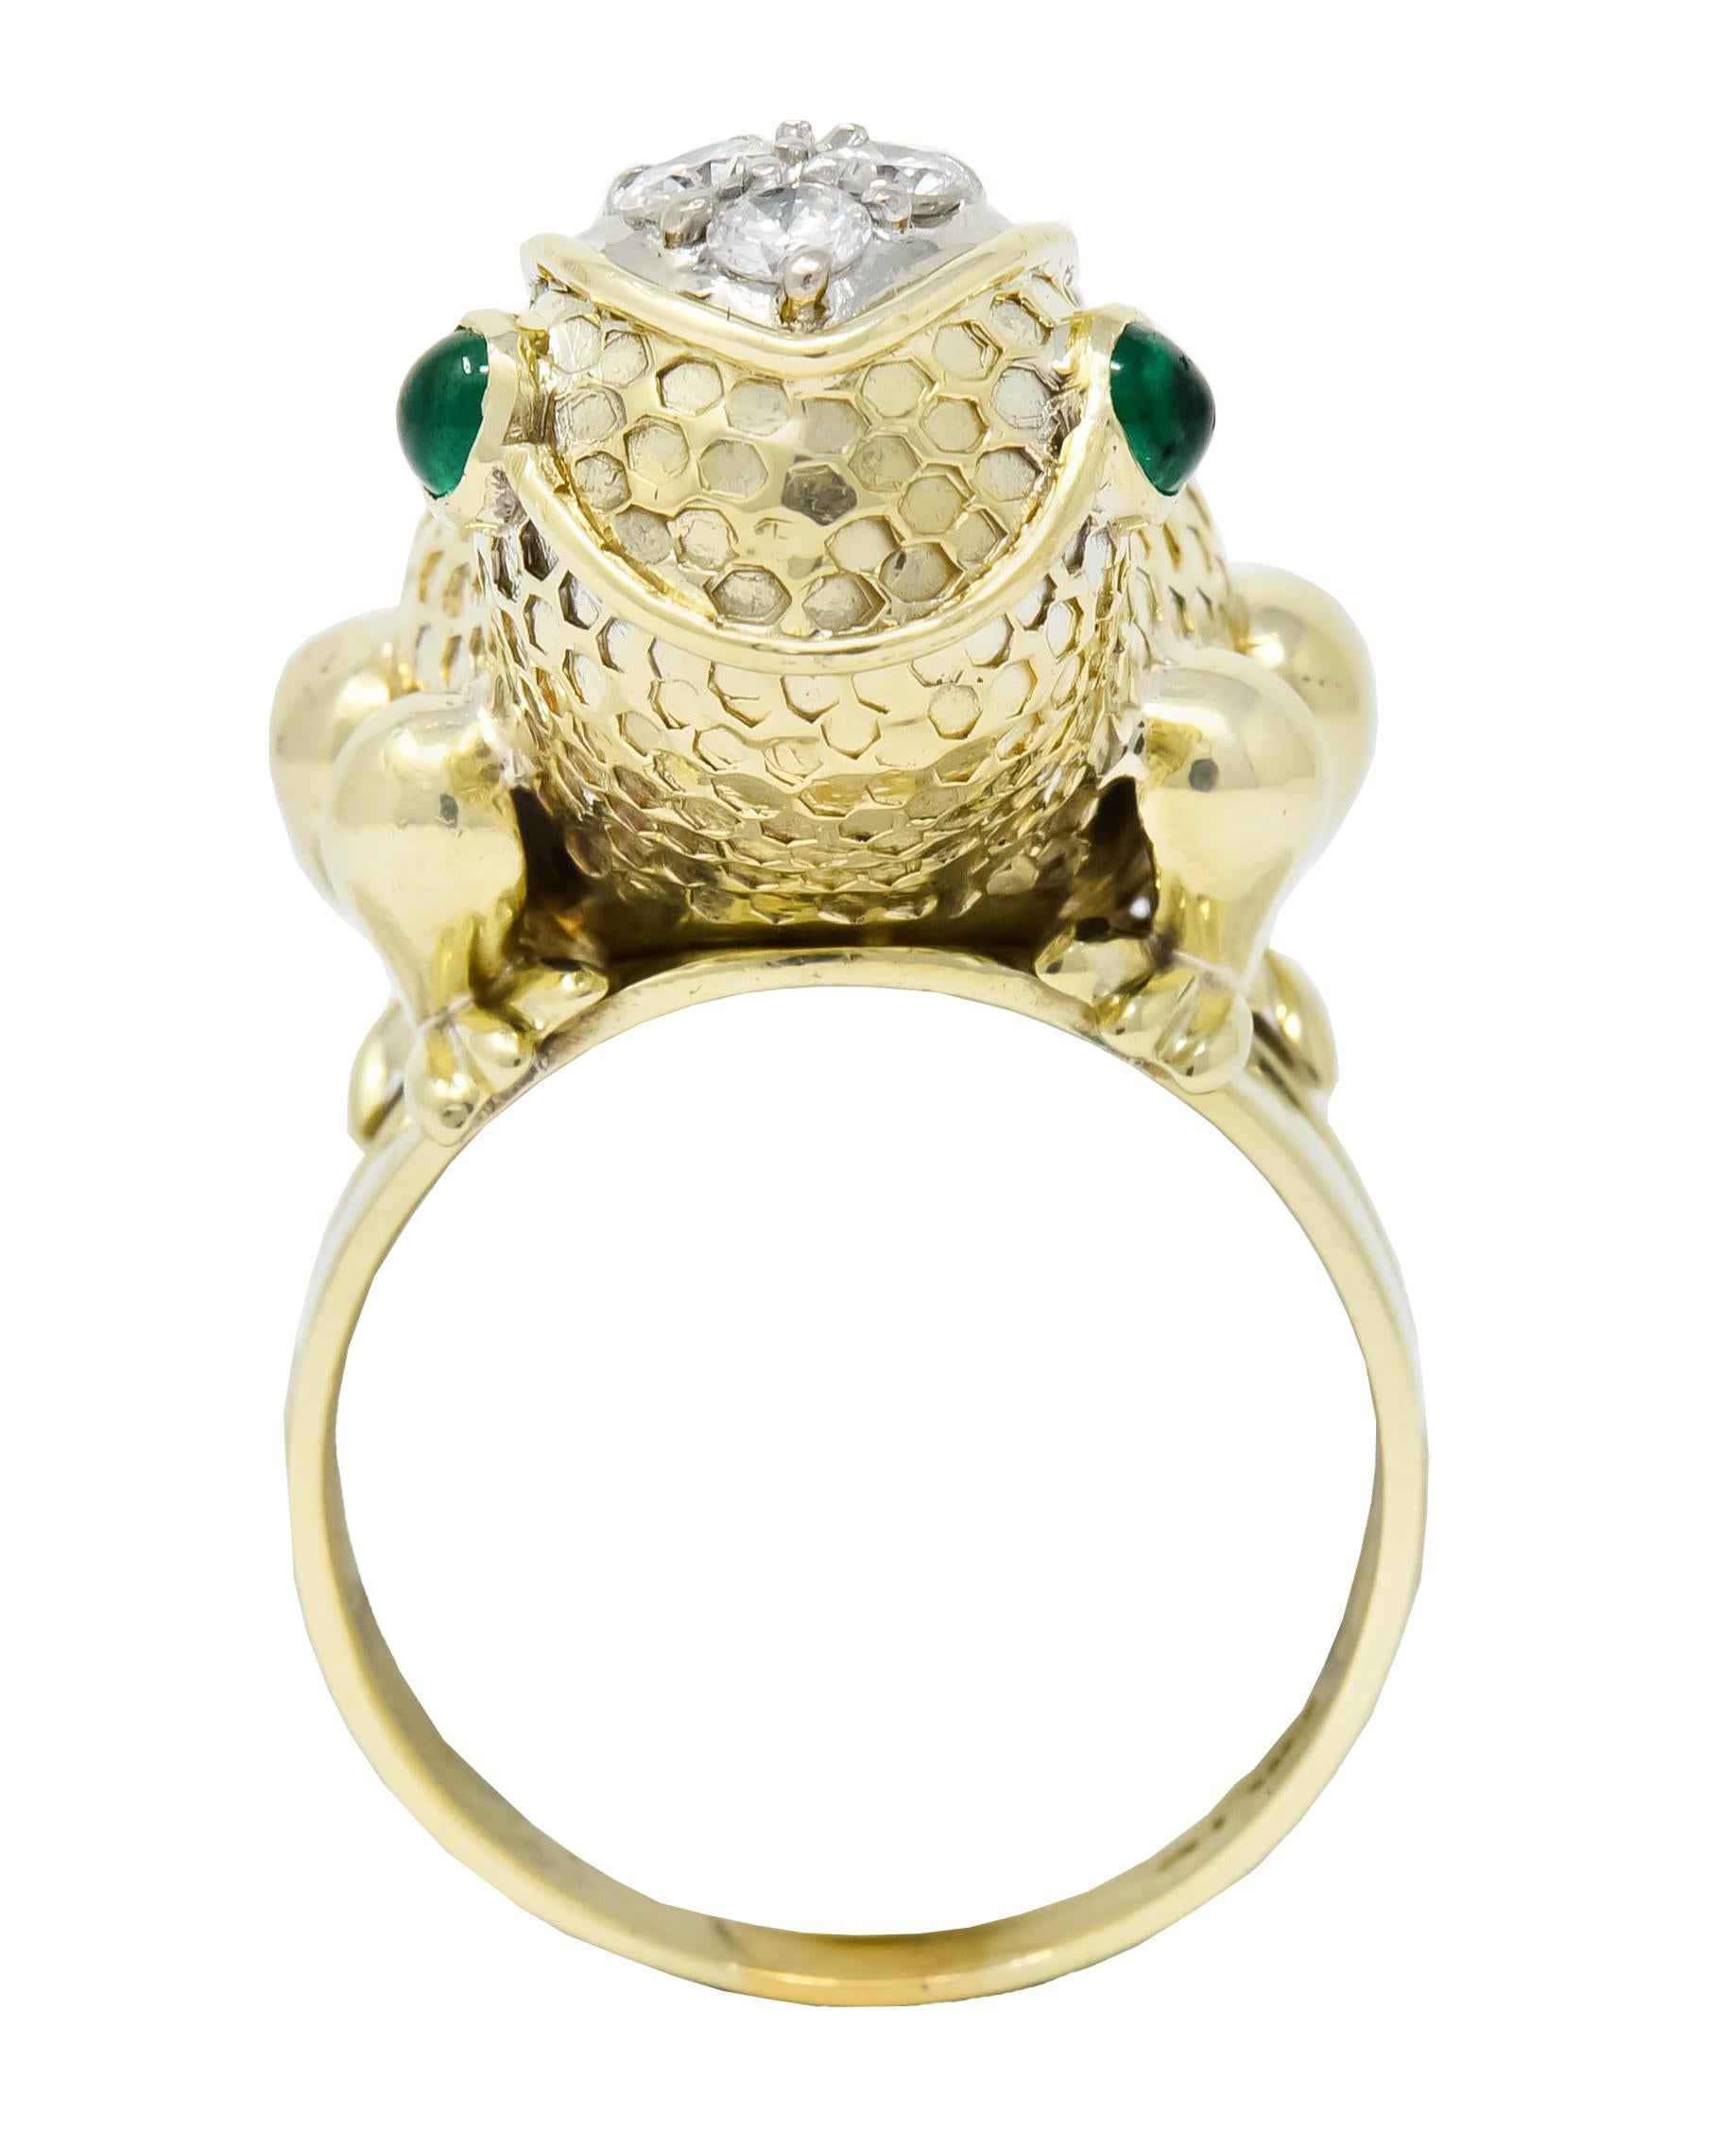 Contemporary Hammerman Brothers Retro 2.75 Carat Diamond Emerald 14 Karat Gold Frog Ring